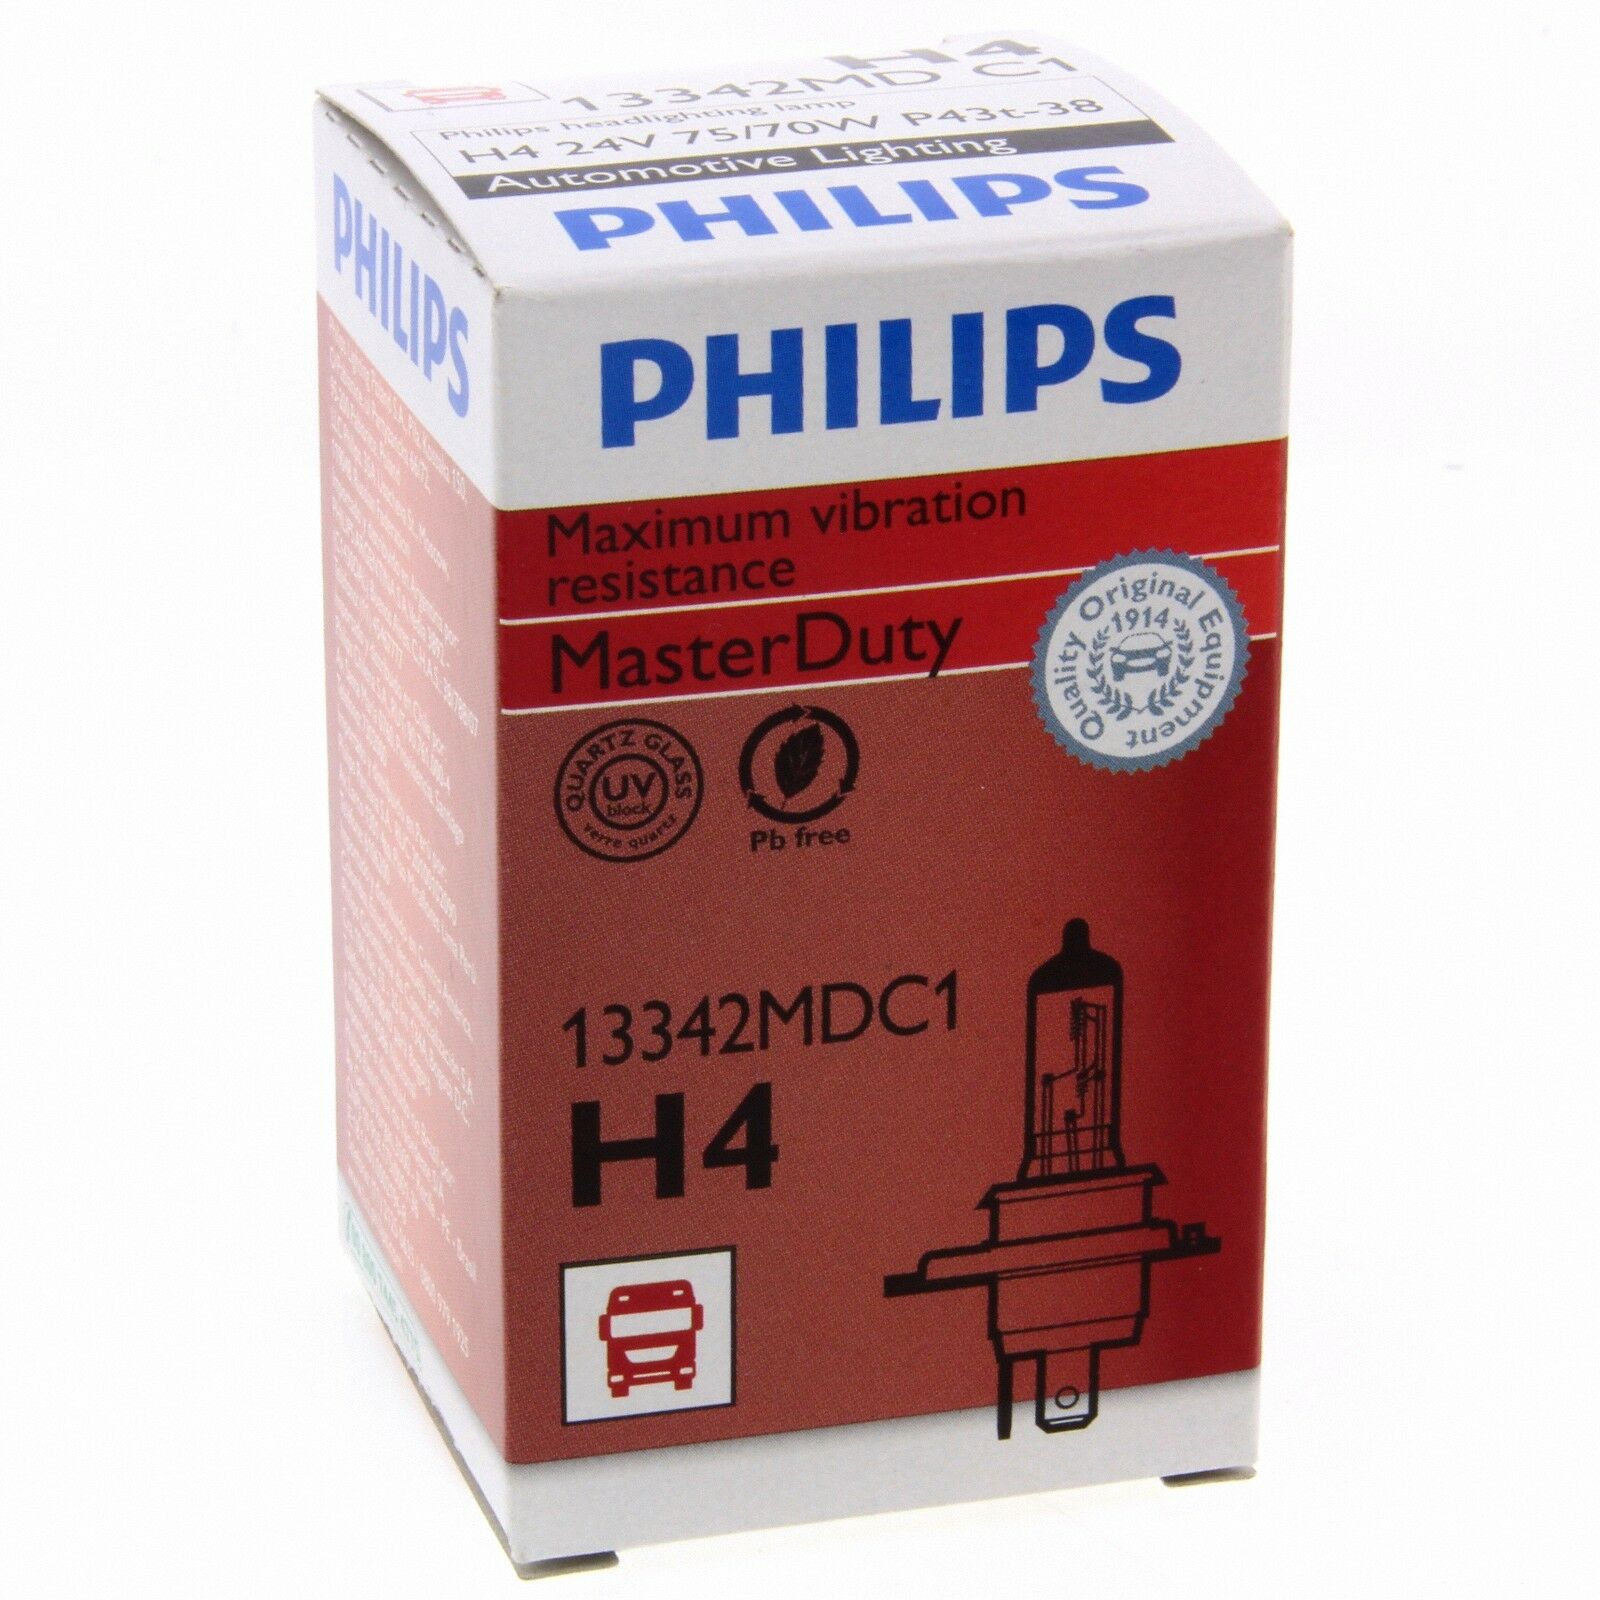 H4 Philips MasterDuty 2x Longlife LKW 24V Halogenlampe 13342MD Box 1 Stück